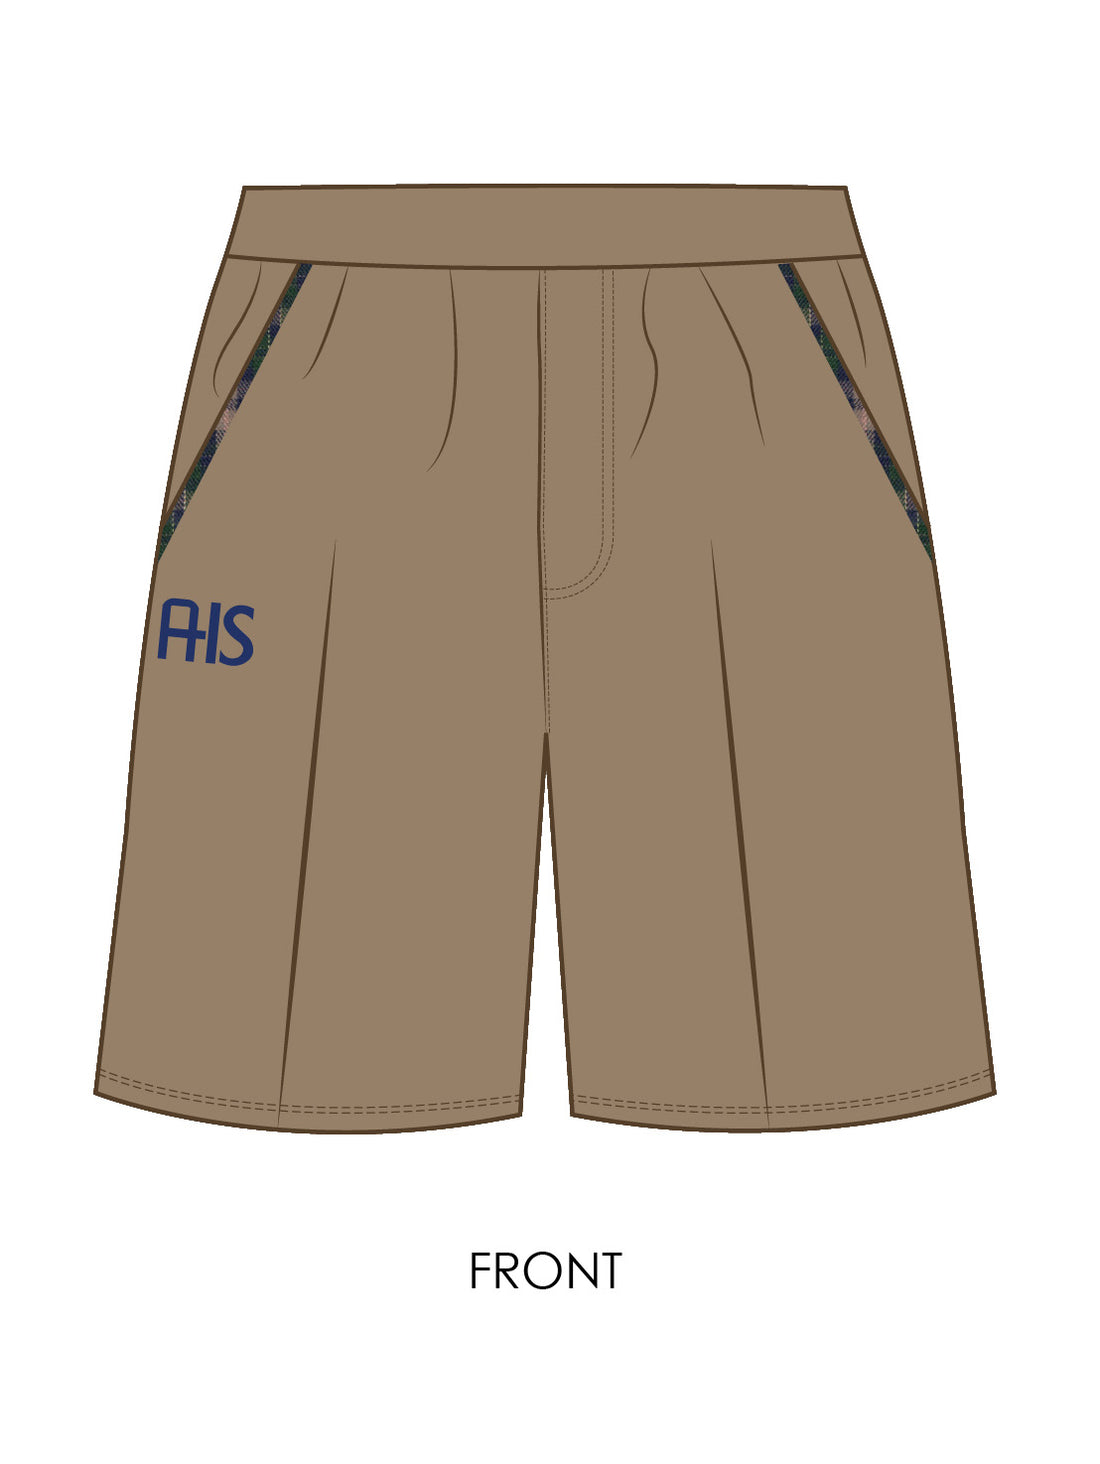 AIS Shorts (KG - Grades)